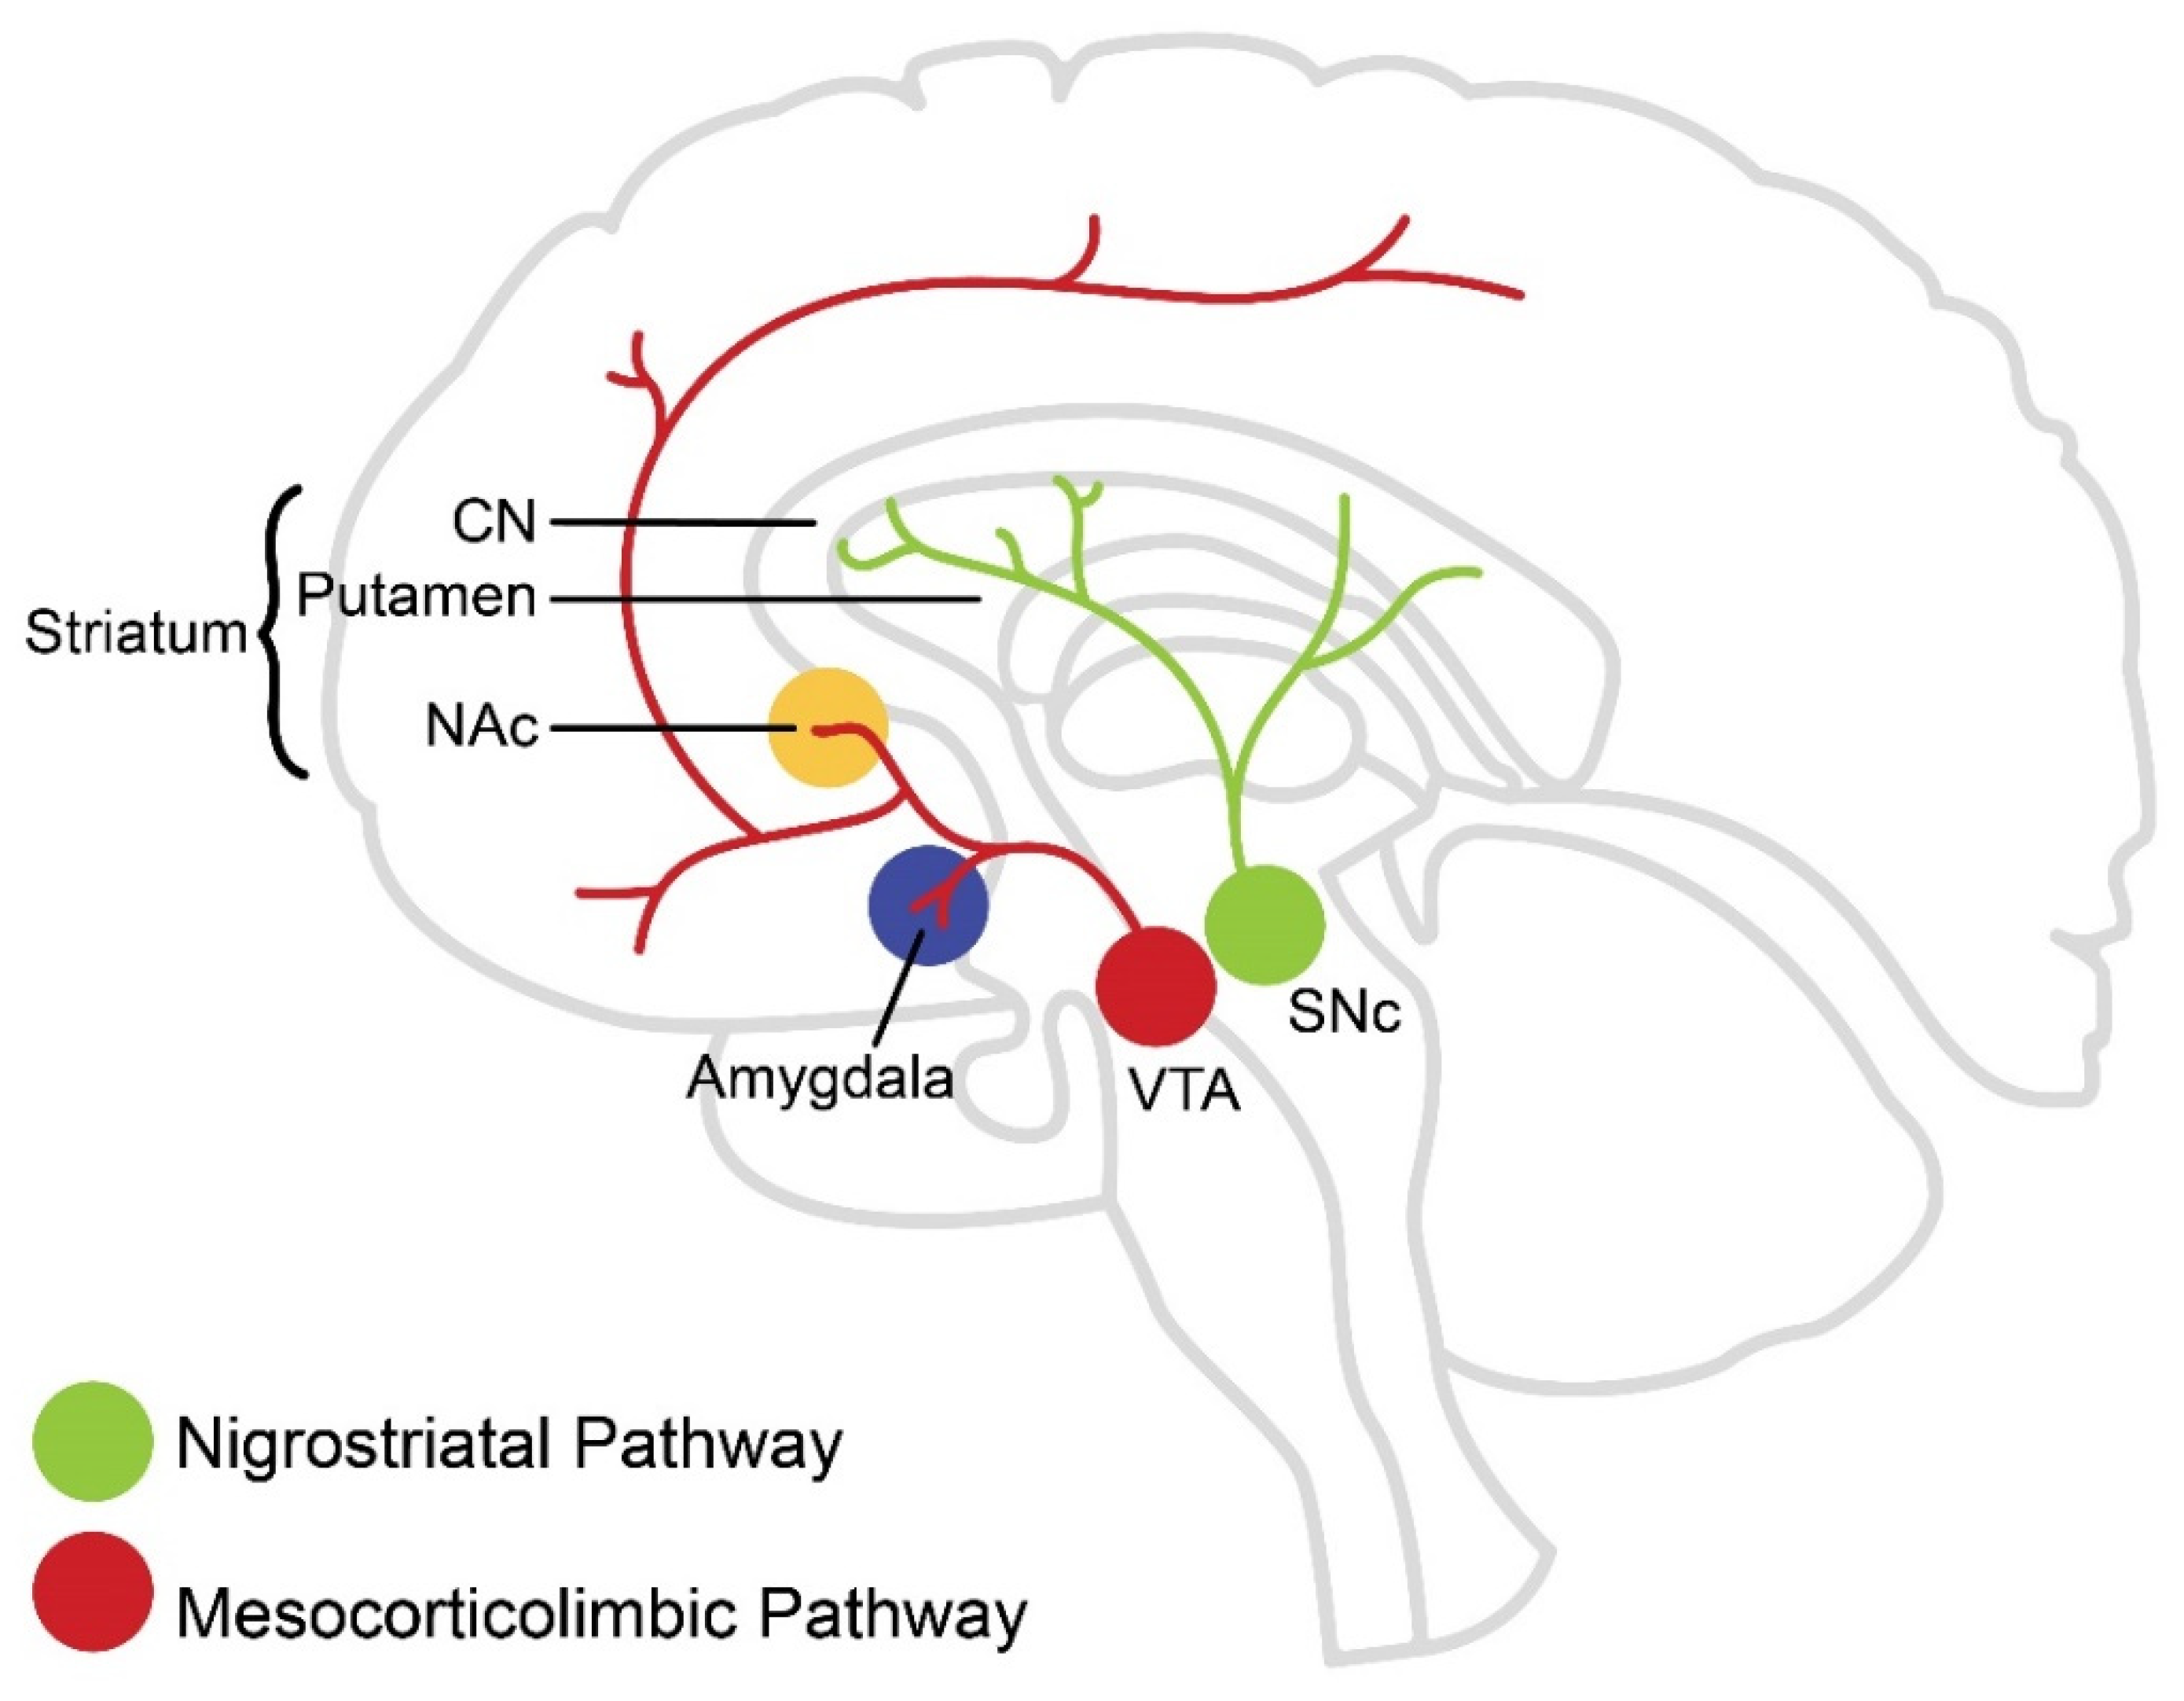 dopamine pathways in the brain